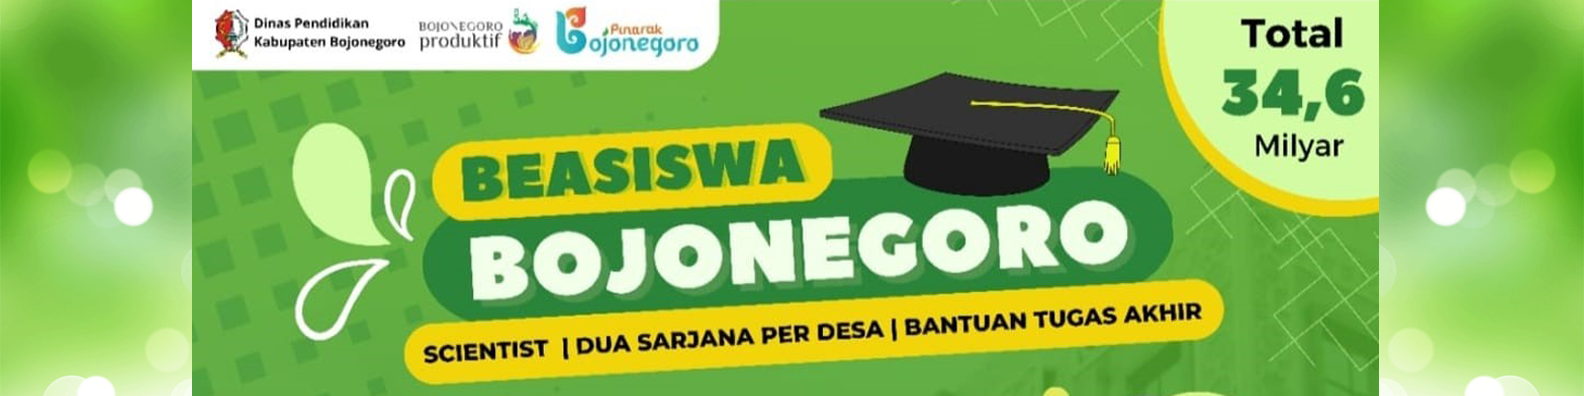 Program Beasiswa Bojonegoro<BR>Beasiswa Prestasi, Beasiswa Sepuluh Sarjana per Desa, Beasiswa Tugas Akhir